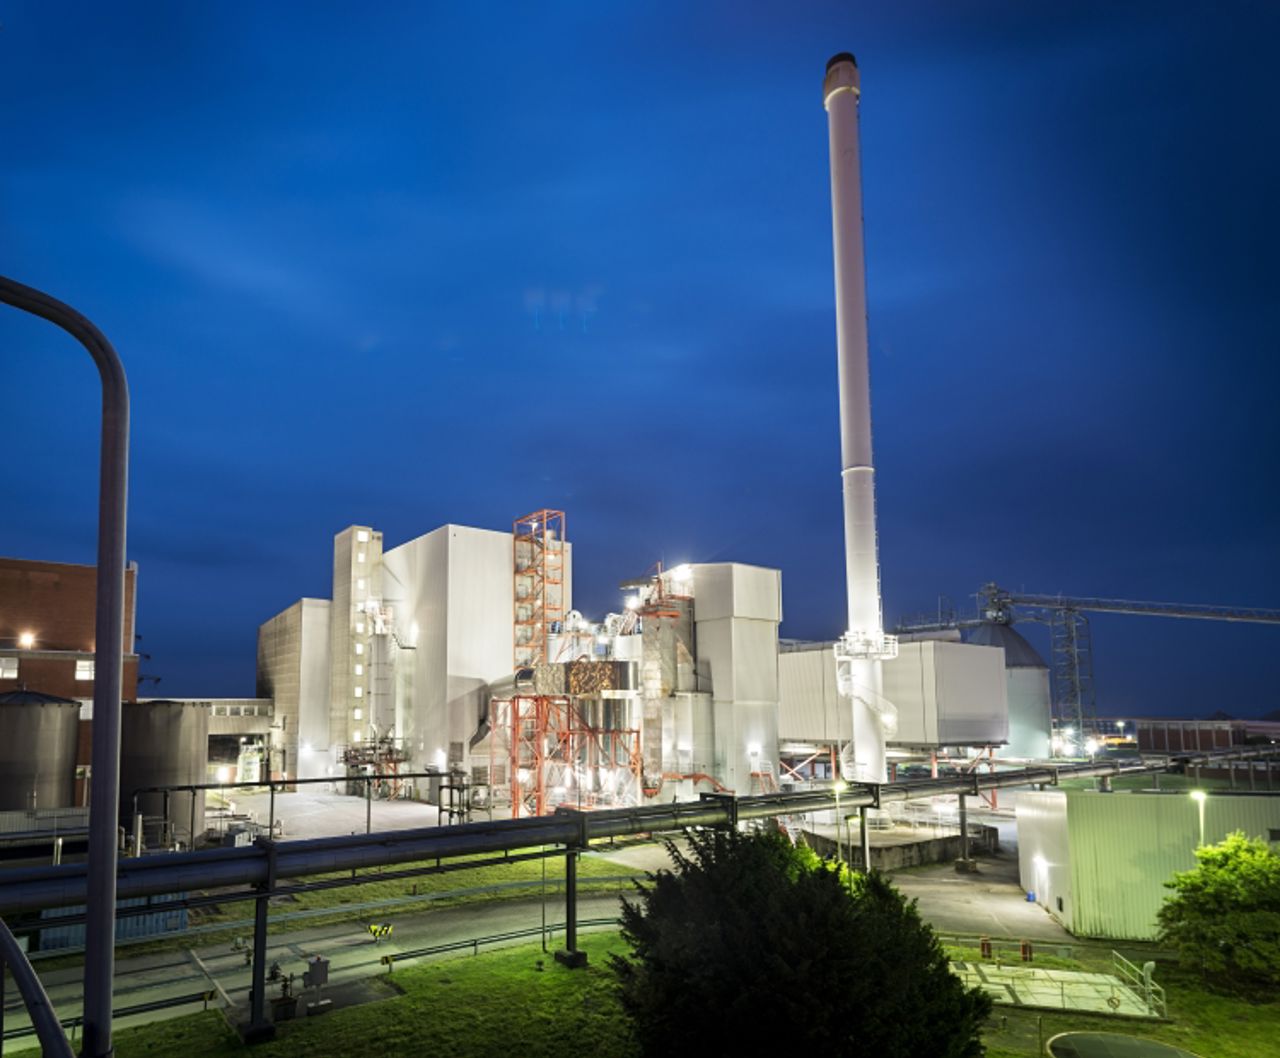 Biomass plant lit up at night